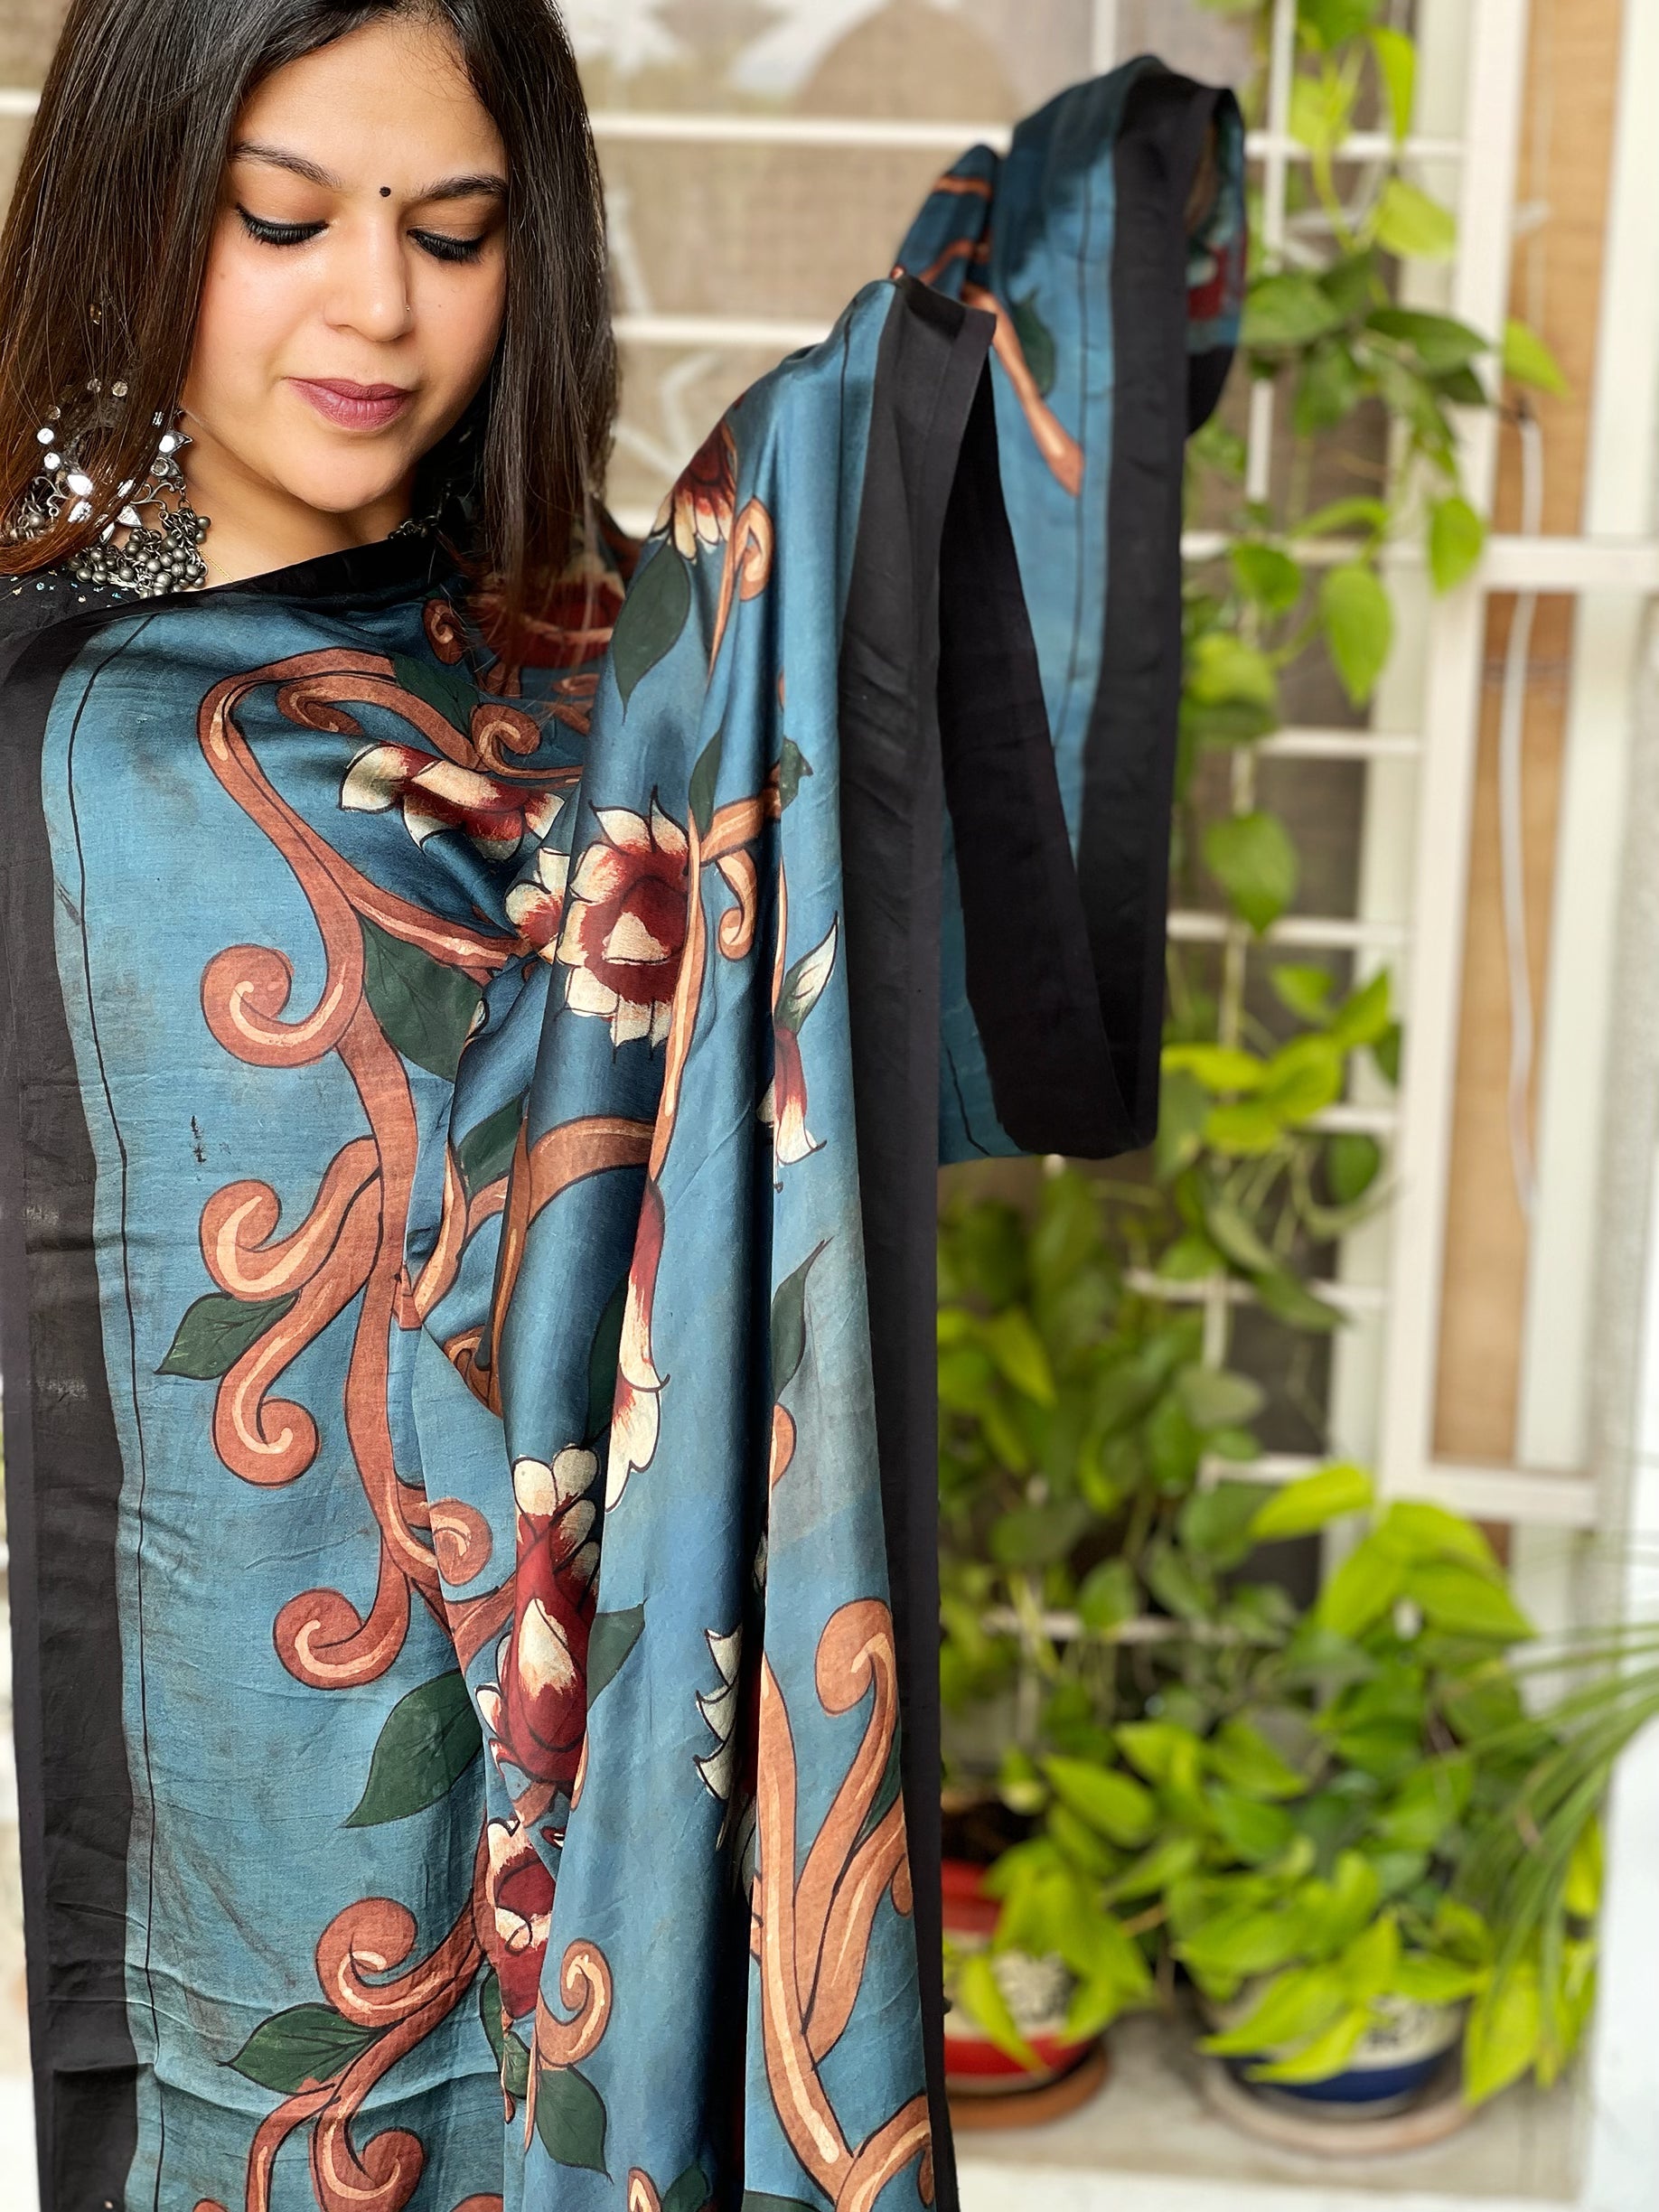 Handsketched & Handpainted Dupatta in Modal Silk